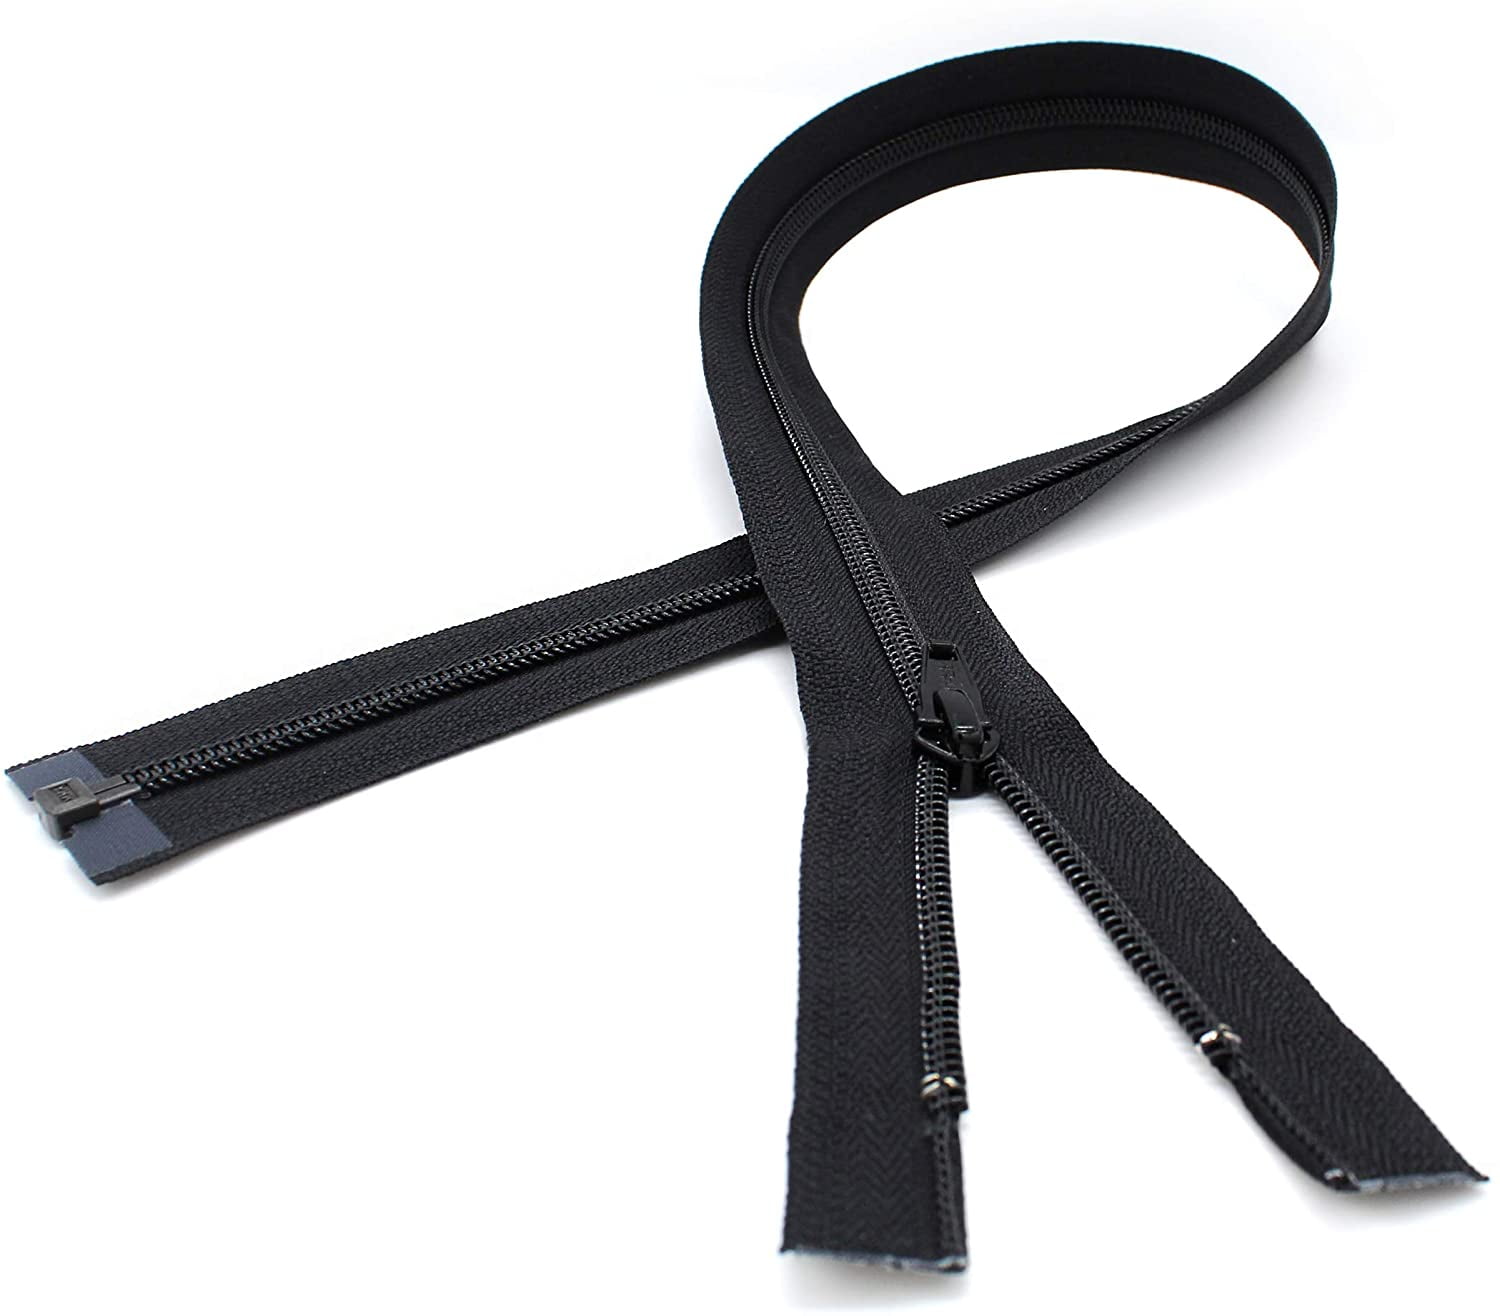 Coats Water-Resistant Separating Zipper 28"-Black